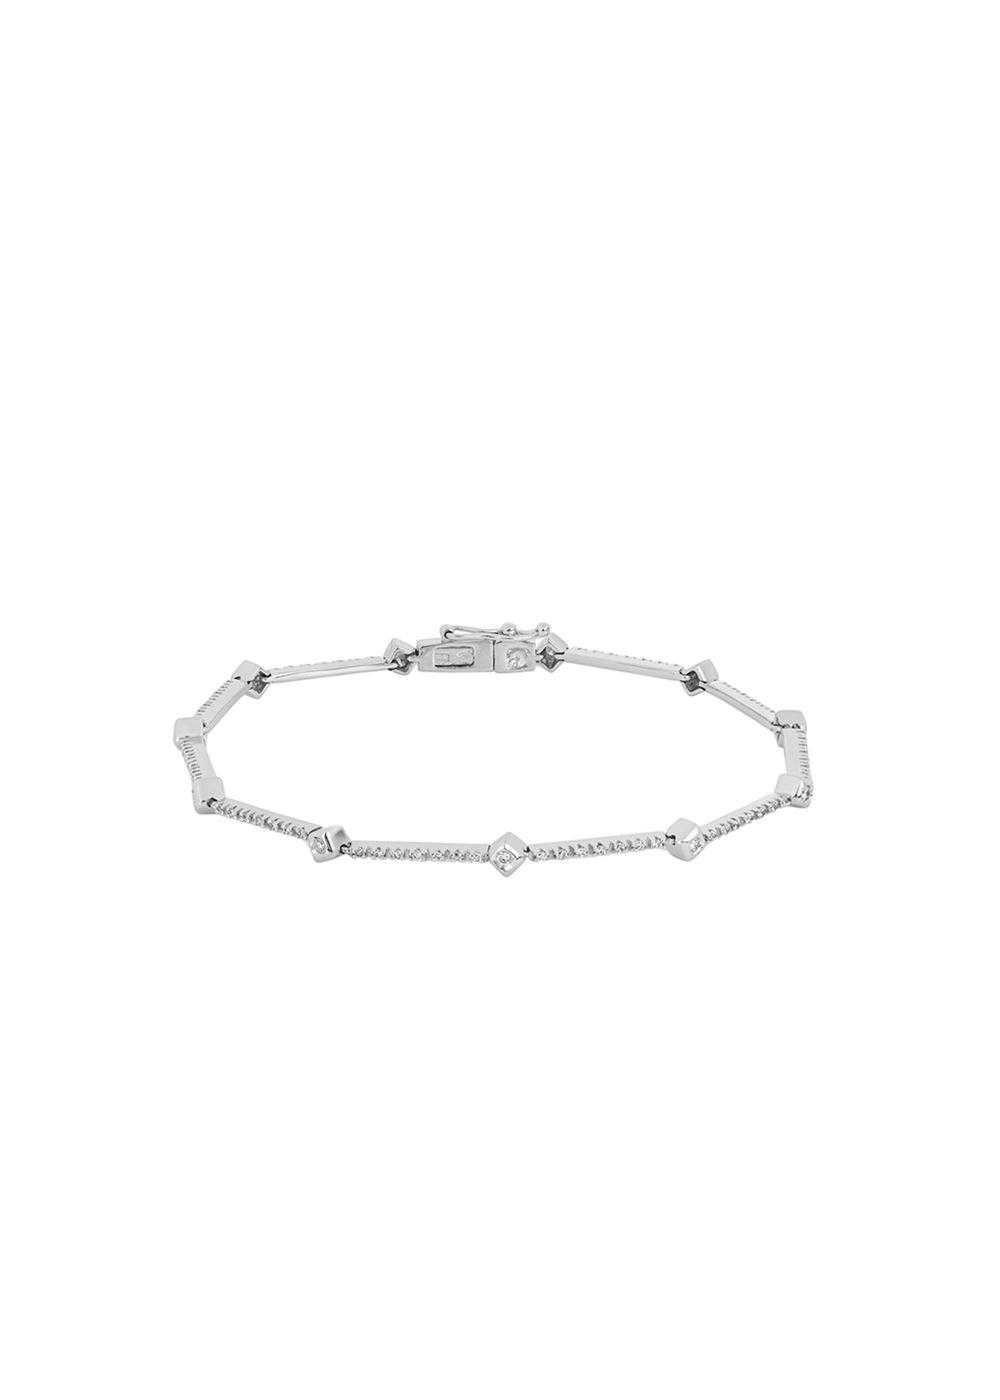 Bespoke 18ct white gold & diamond line bracelet - image 1